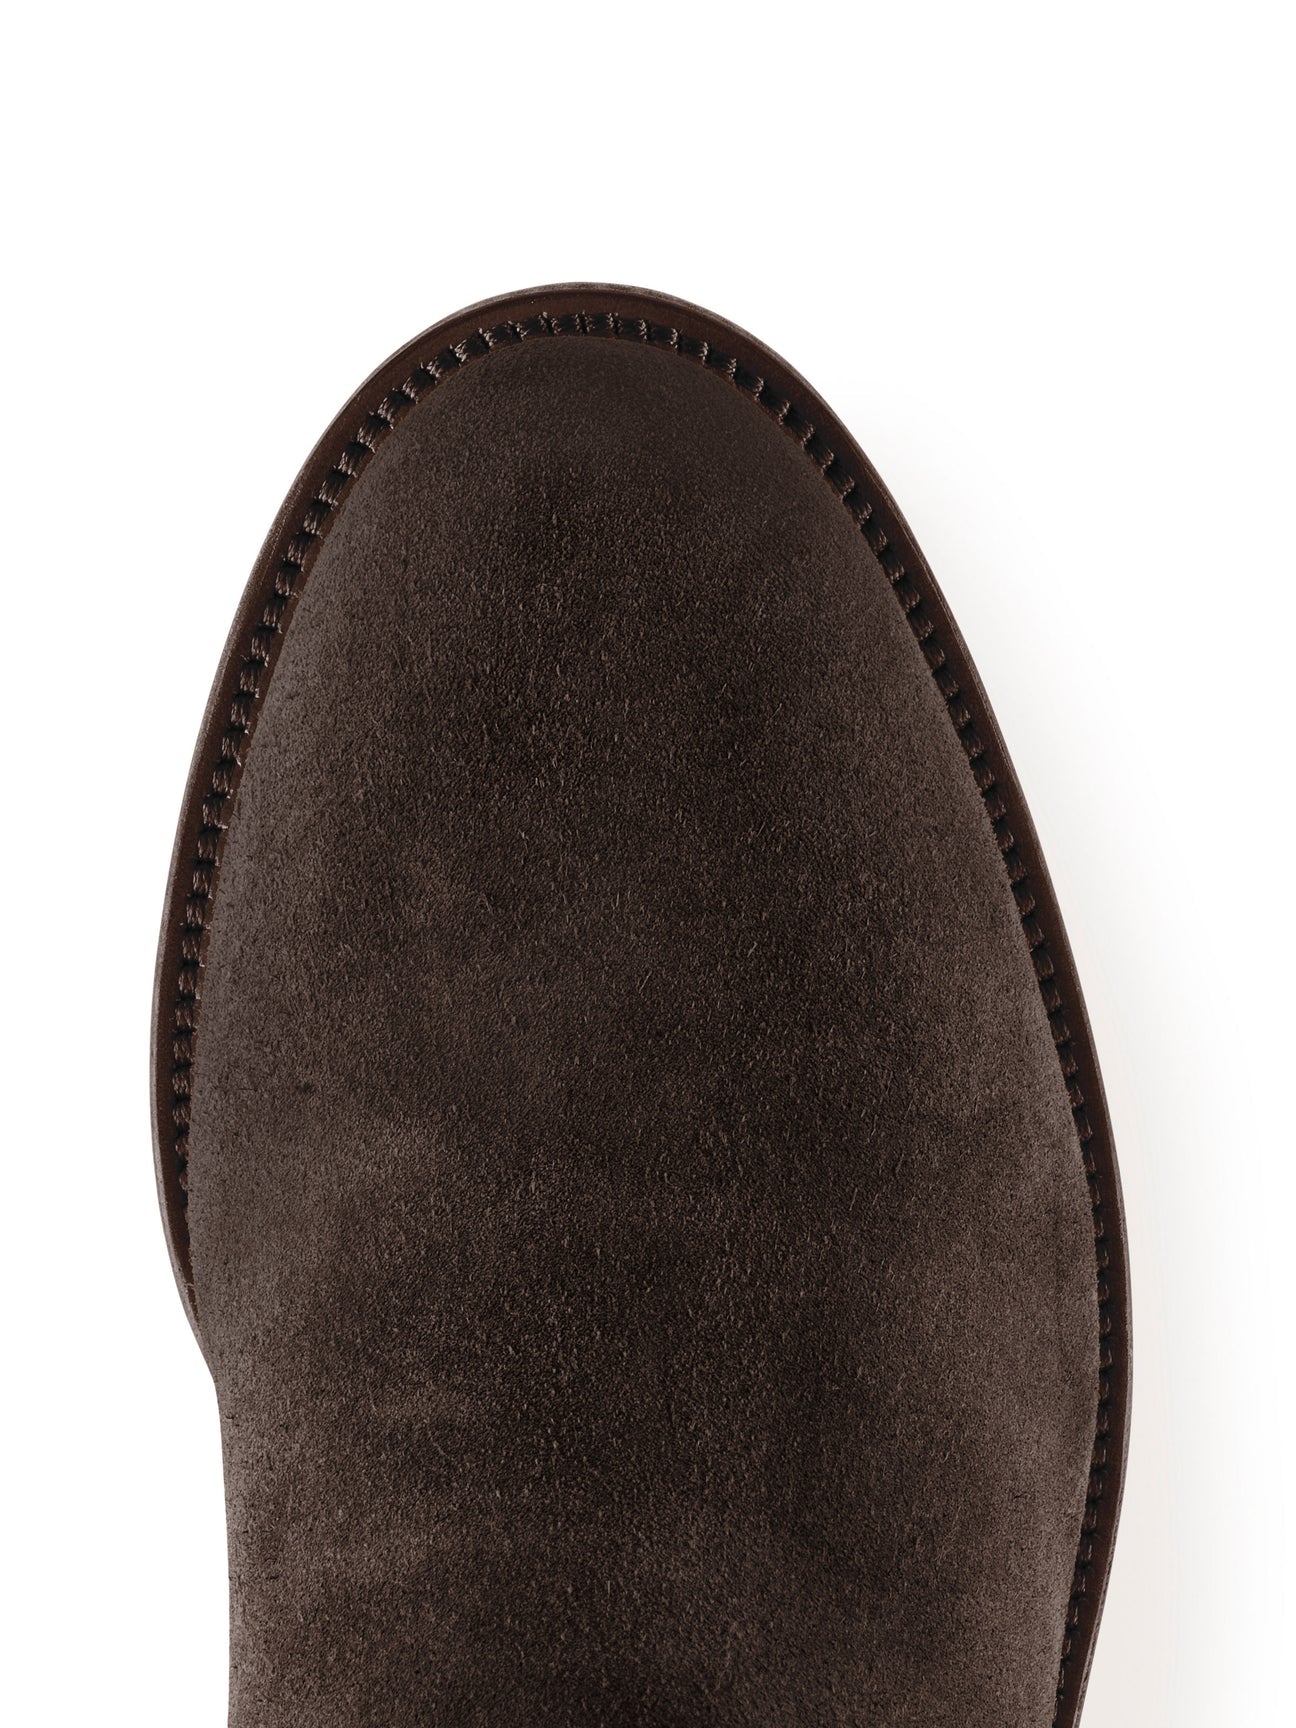 The Regina
Women's Tall Heeled Boot - Chocolate Suede, Narrow Calf